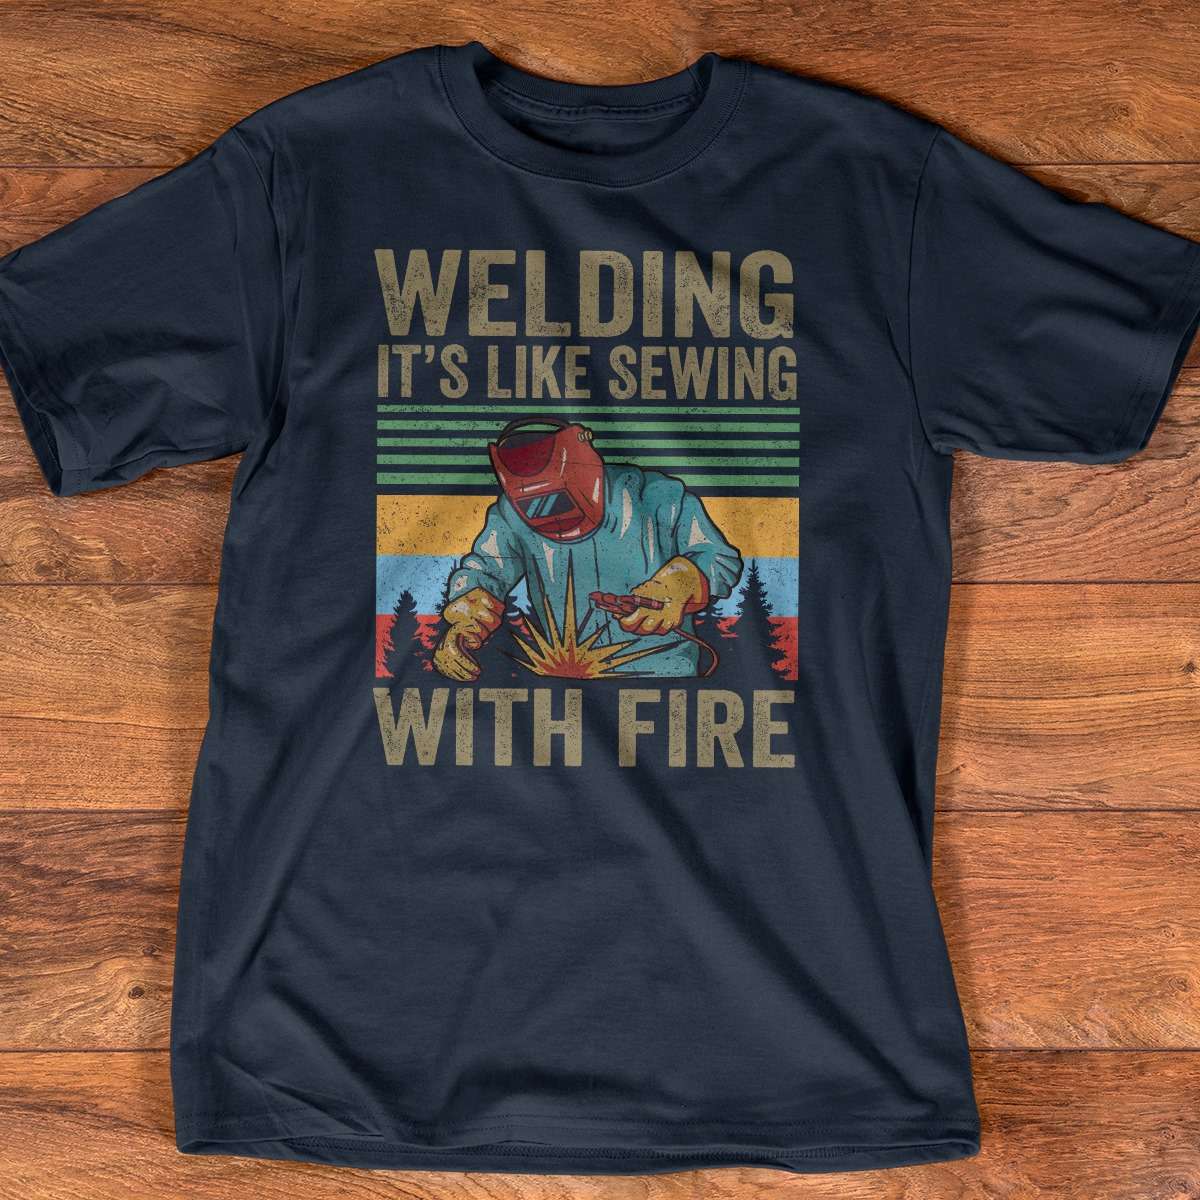 Welding it's like sewing with fire - Welder the job, sewing welding